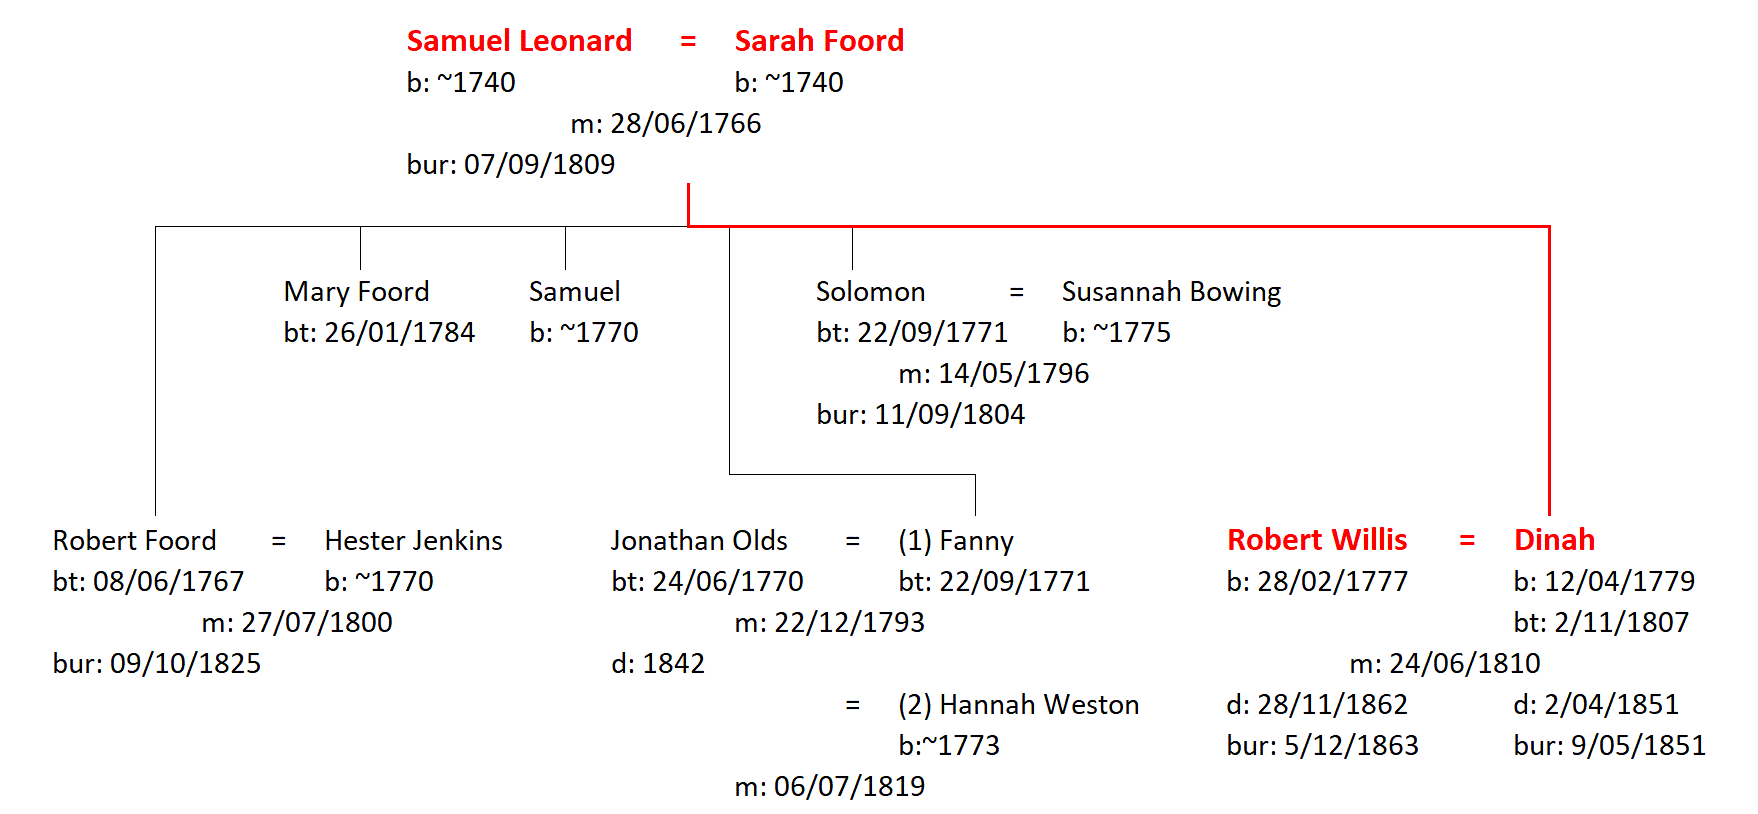 Figure 2: The Family of Samuel and Sarah Leonard